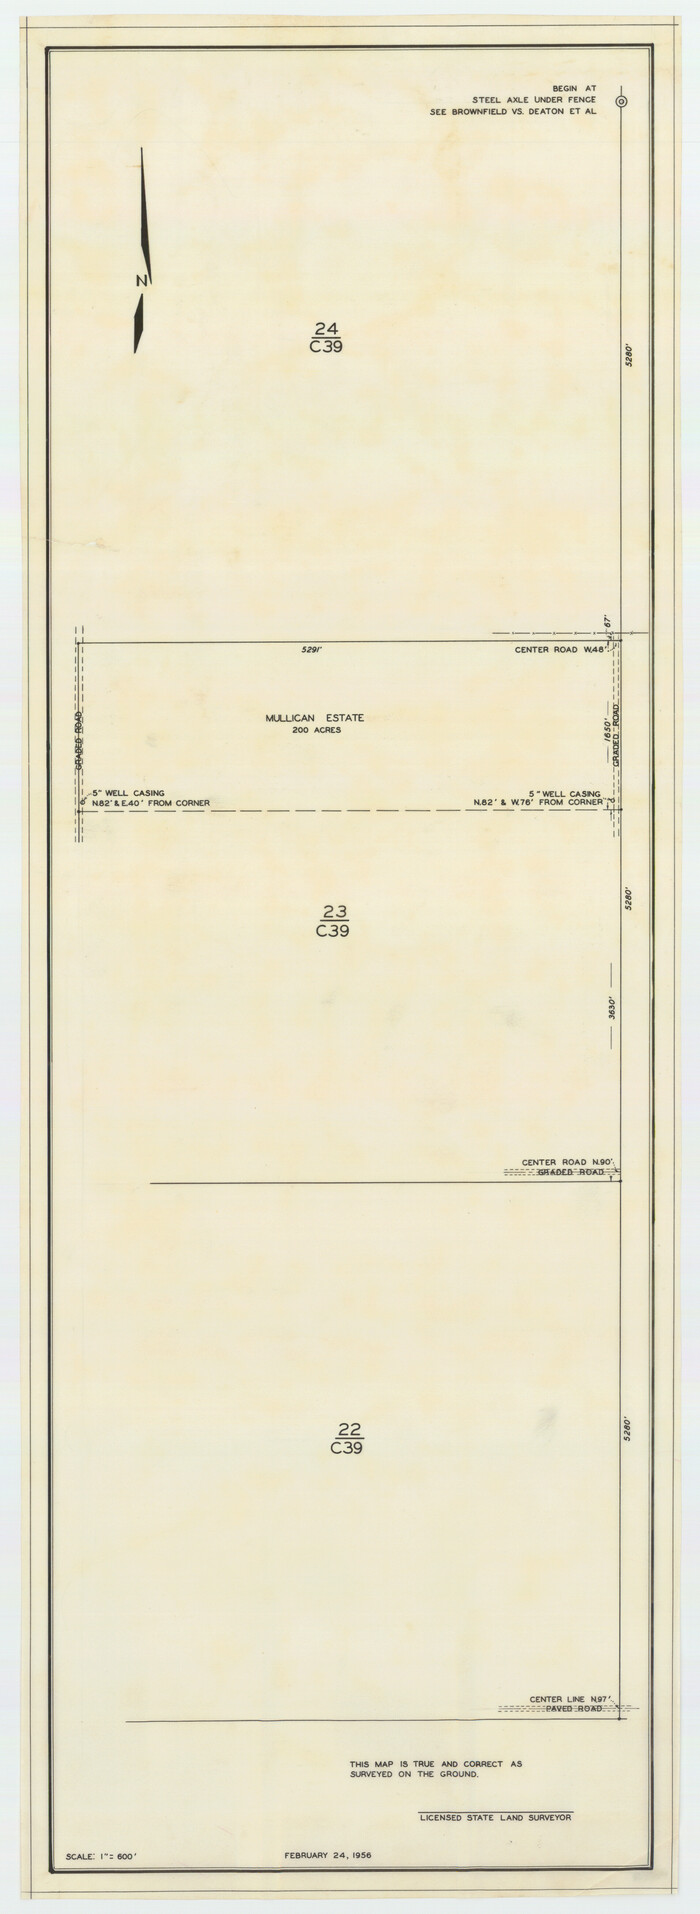 92345, [Block C39, Sections 22, 23 Millican Estate, 24], Twichell Survey Records